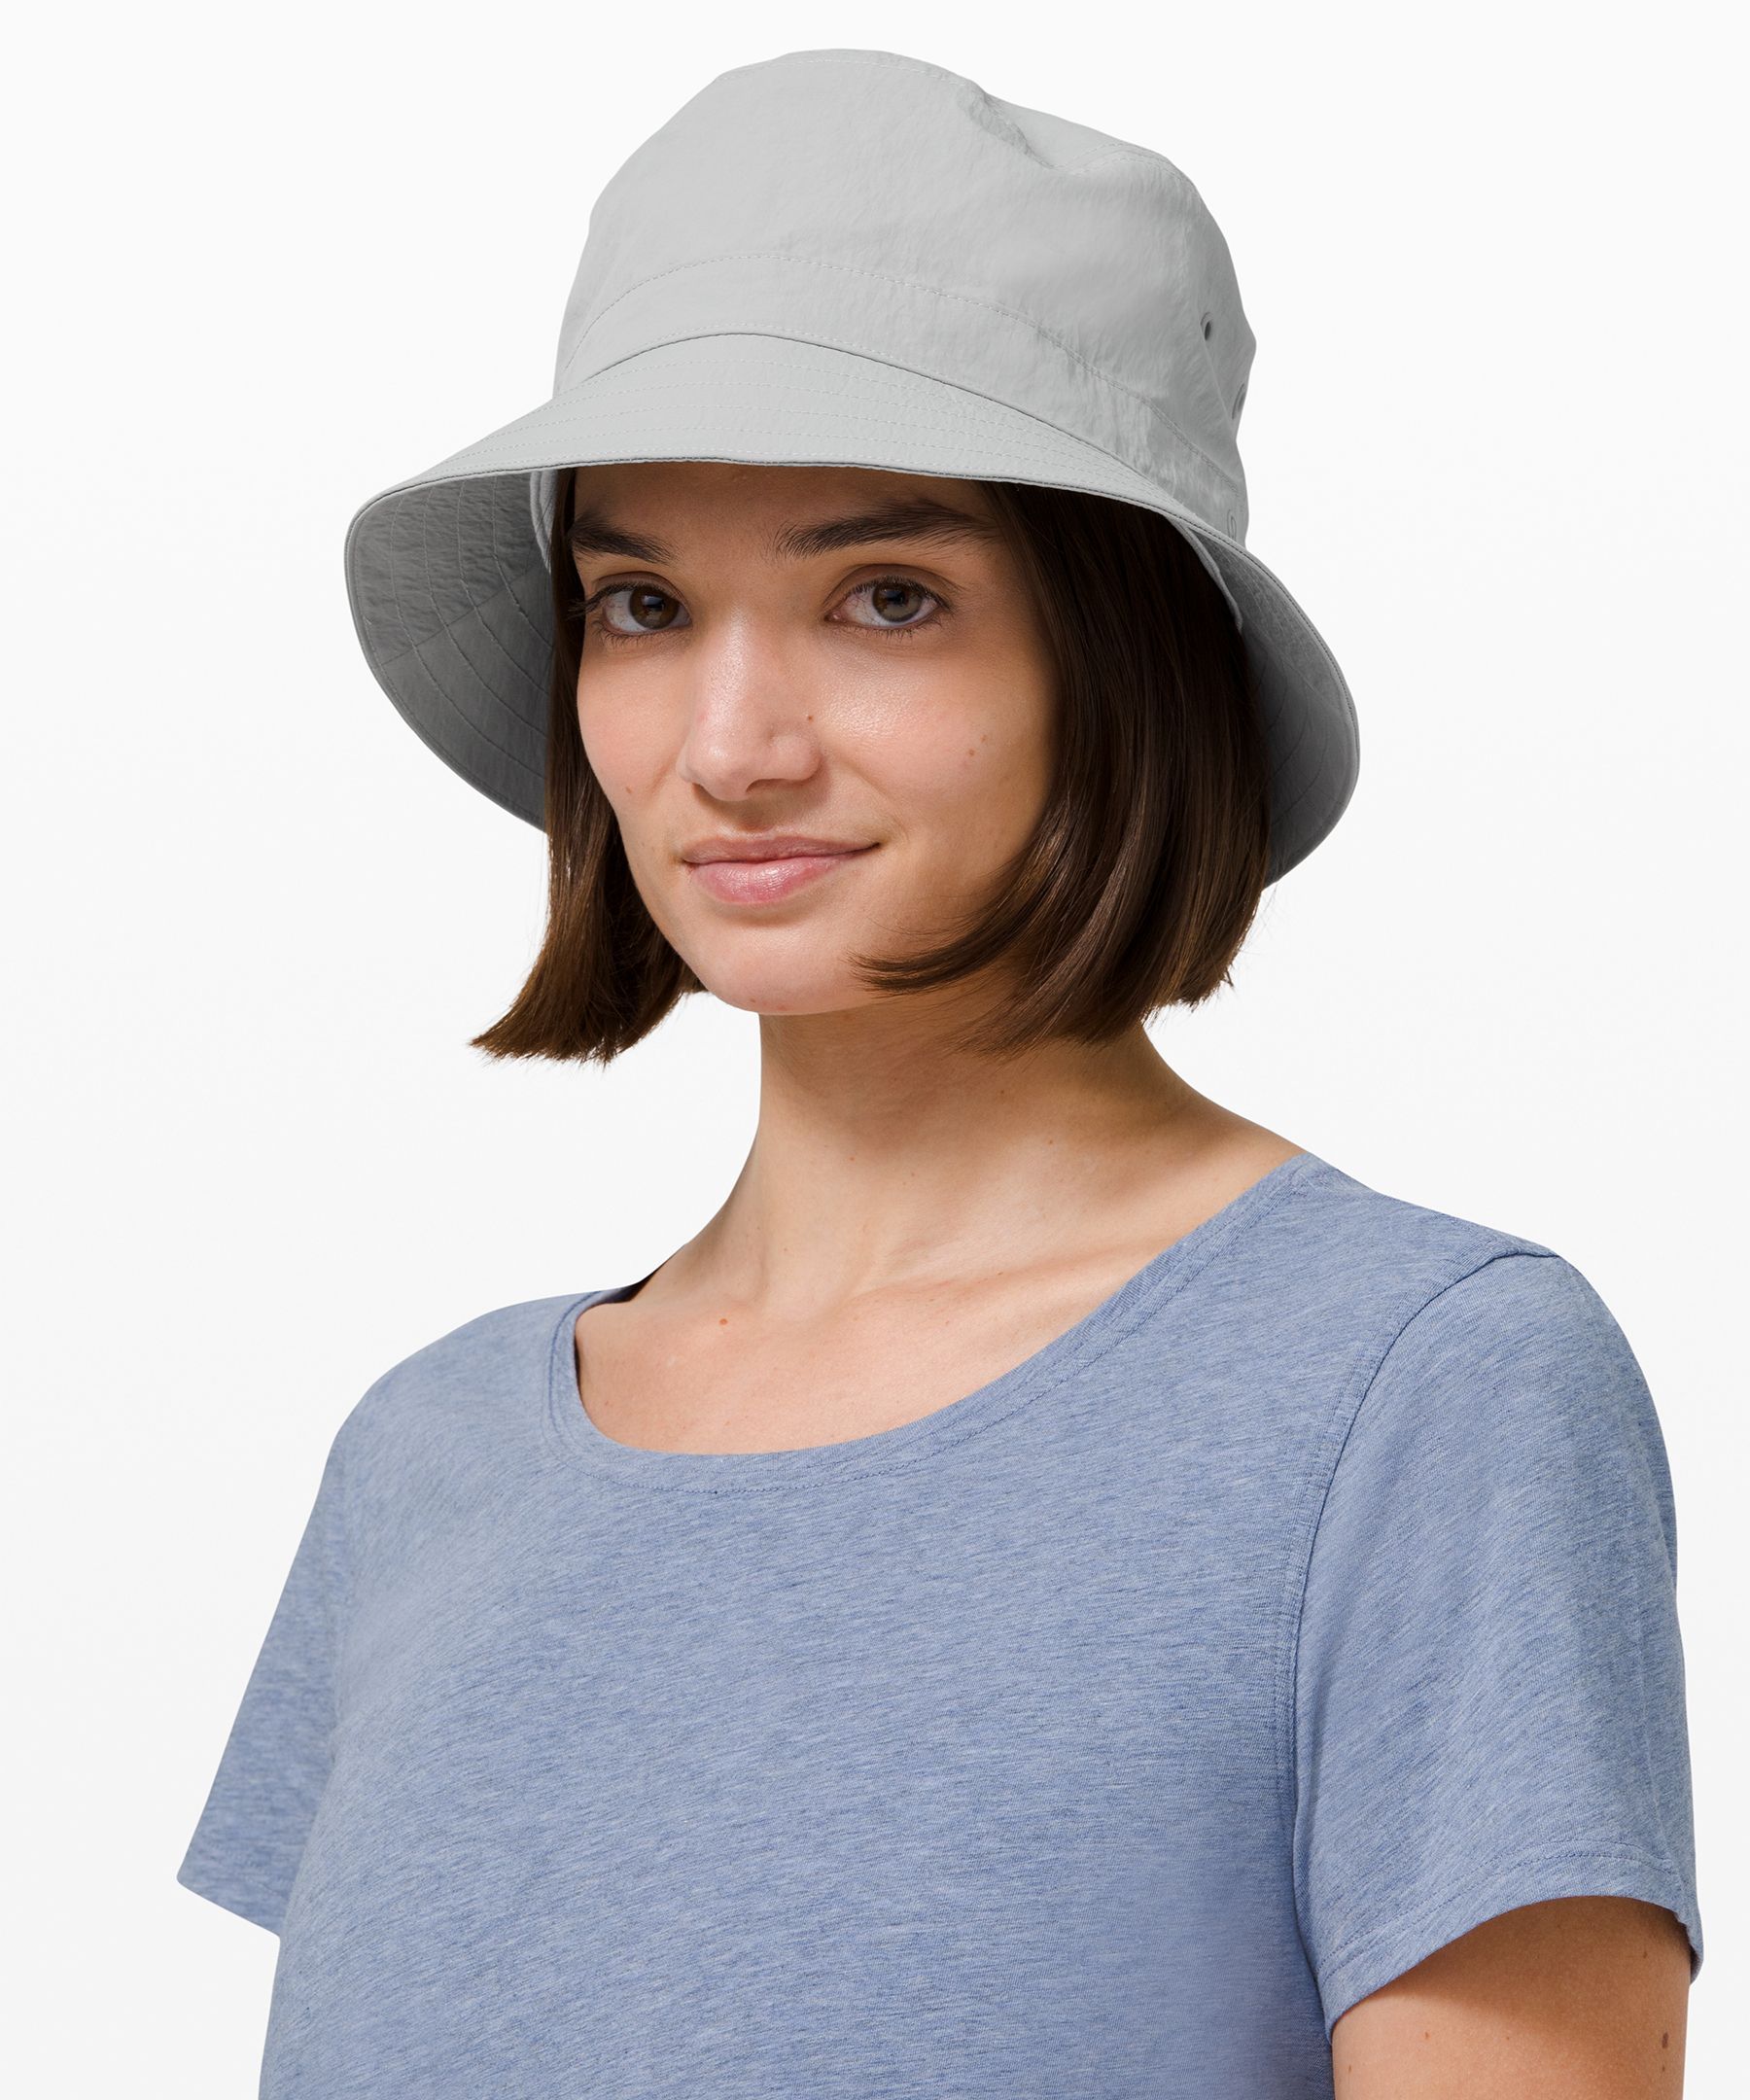 lululemon bucket hat with pocket clip